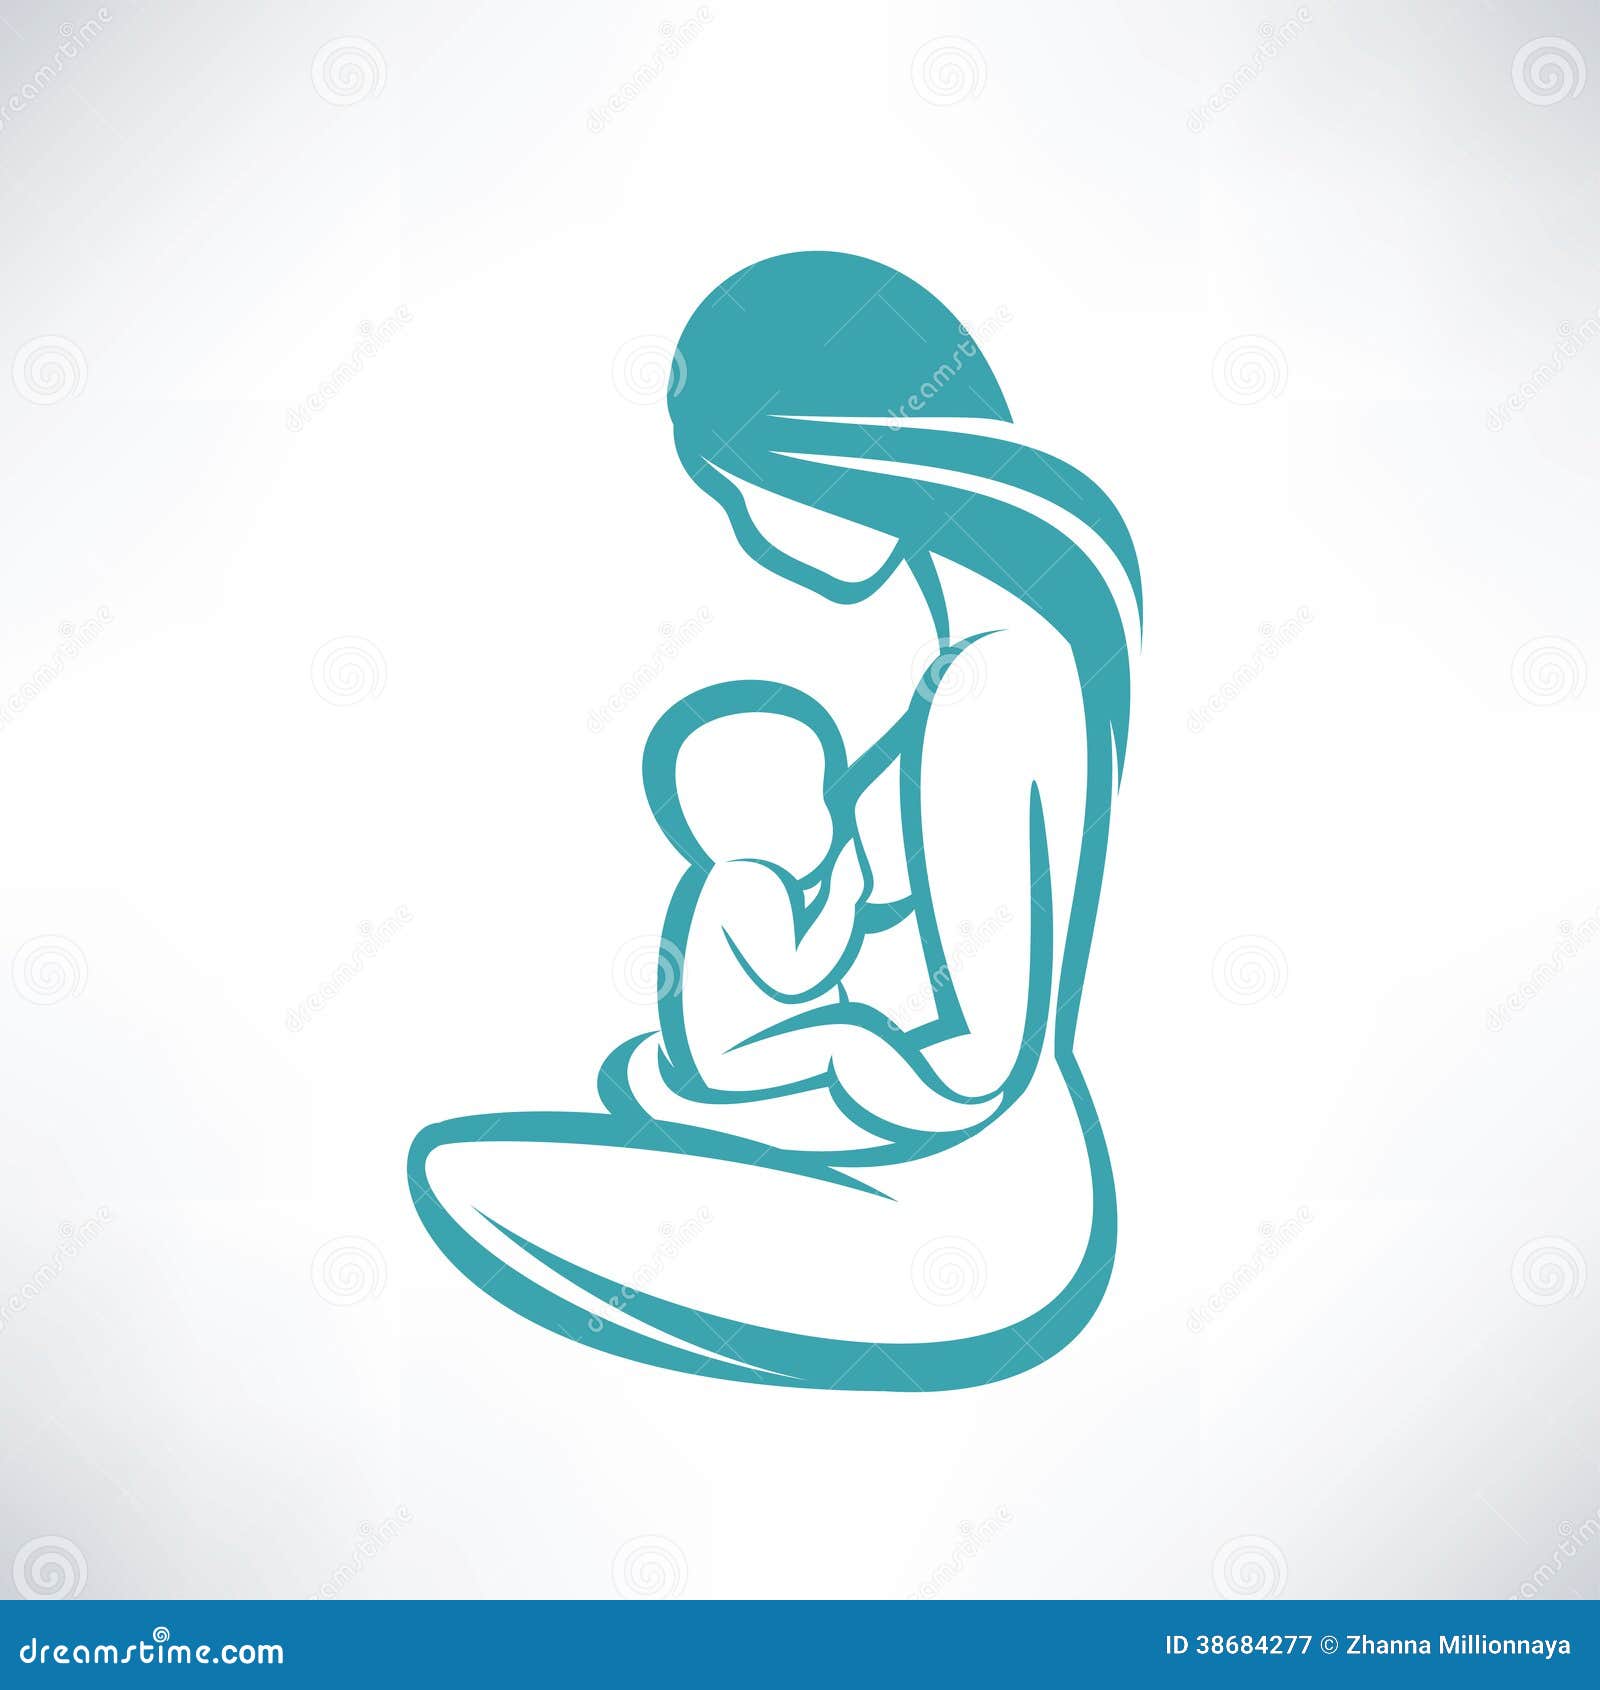 clip art of breastfeeding mother - photo #9